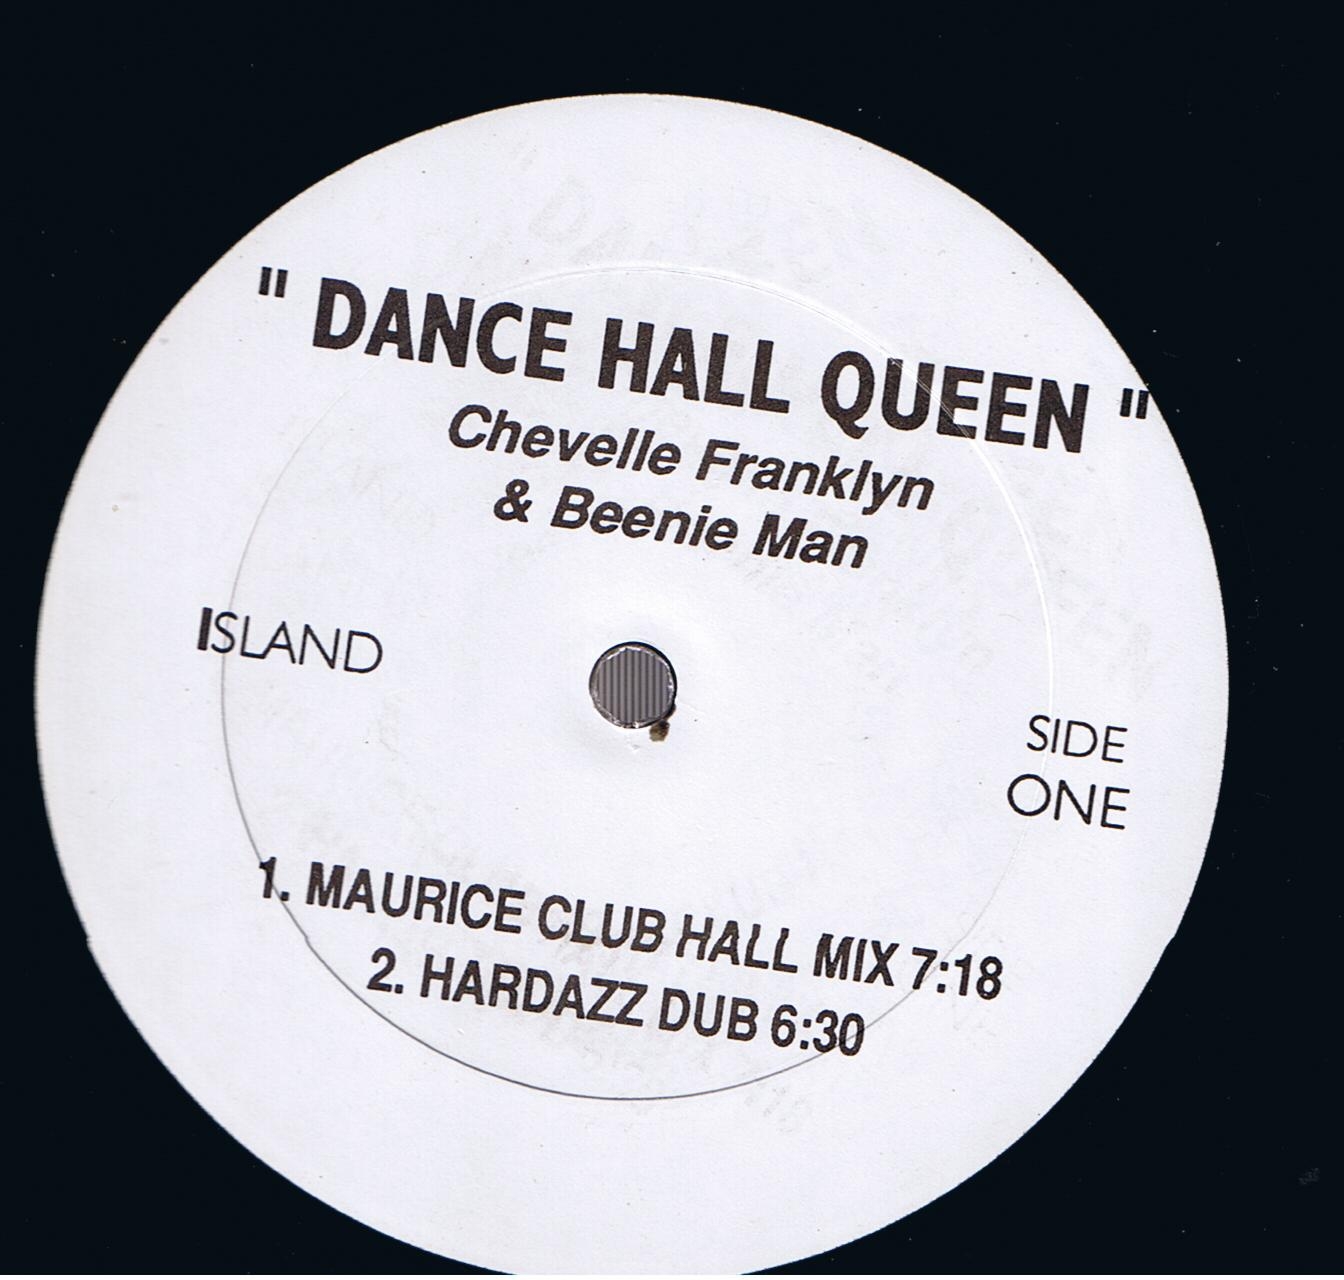 Chevelle Franklyn & Beenie Man - Dance Hall Queen(Maurice Club Hall Mix) / (Hardazz Dub) / Bonzai Mix / Delano Renaissance Mix / Acapella Mix (Original12")